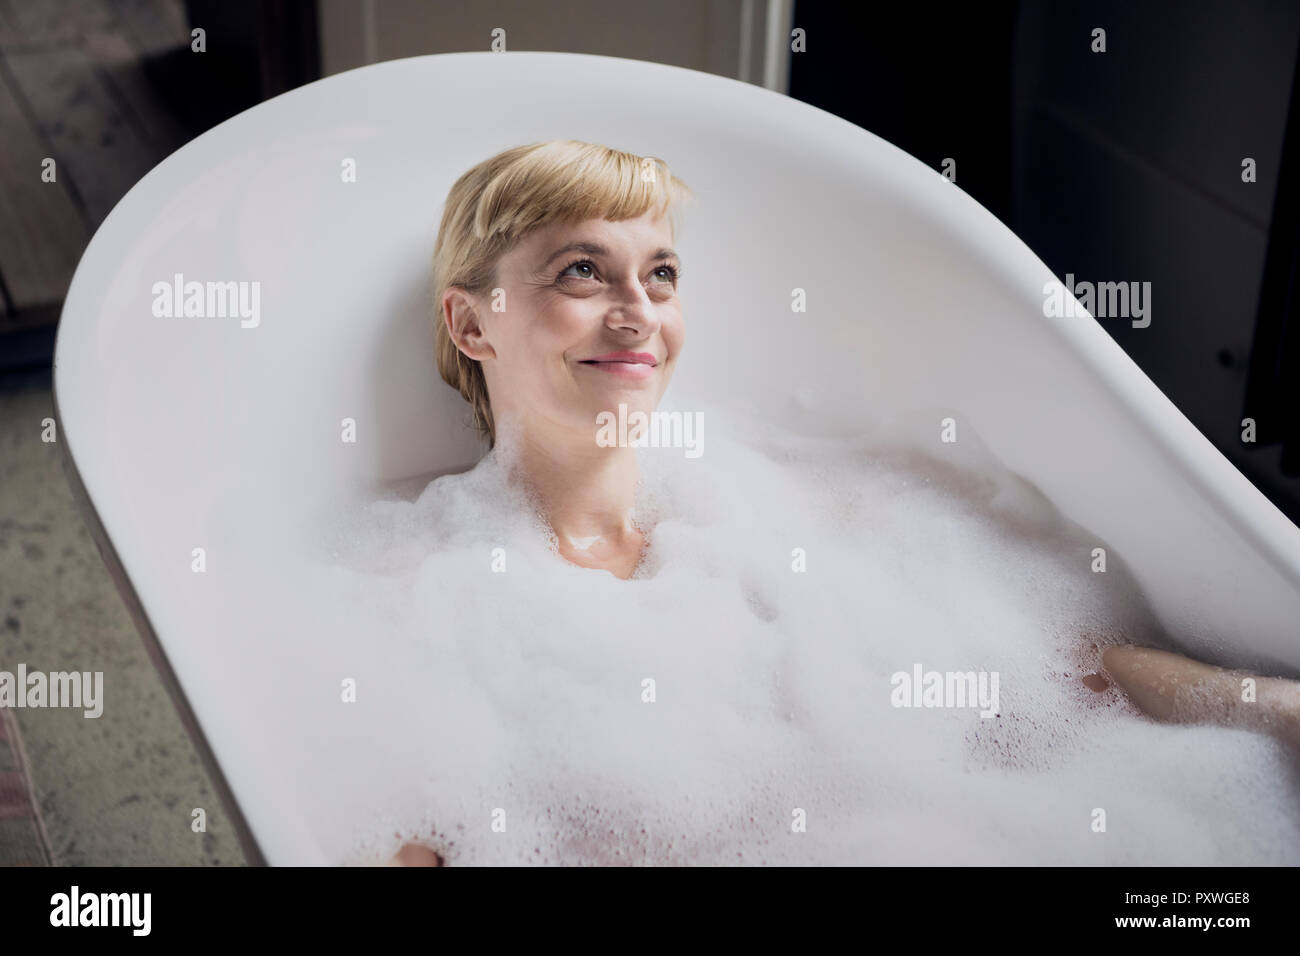 Portrait of happy woman taking bubble bath Stock Photo